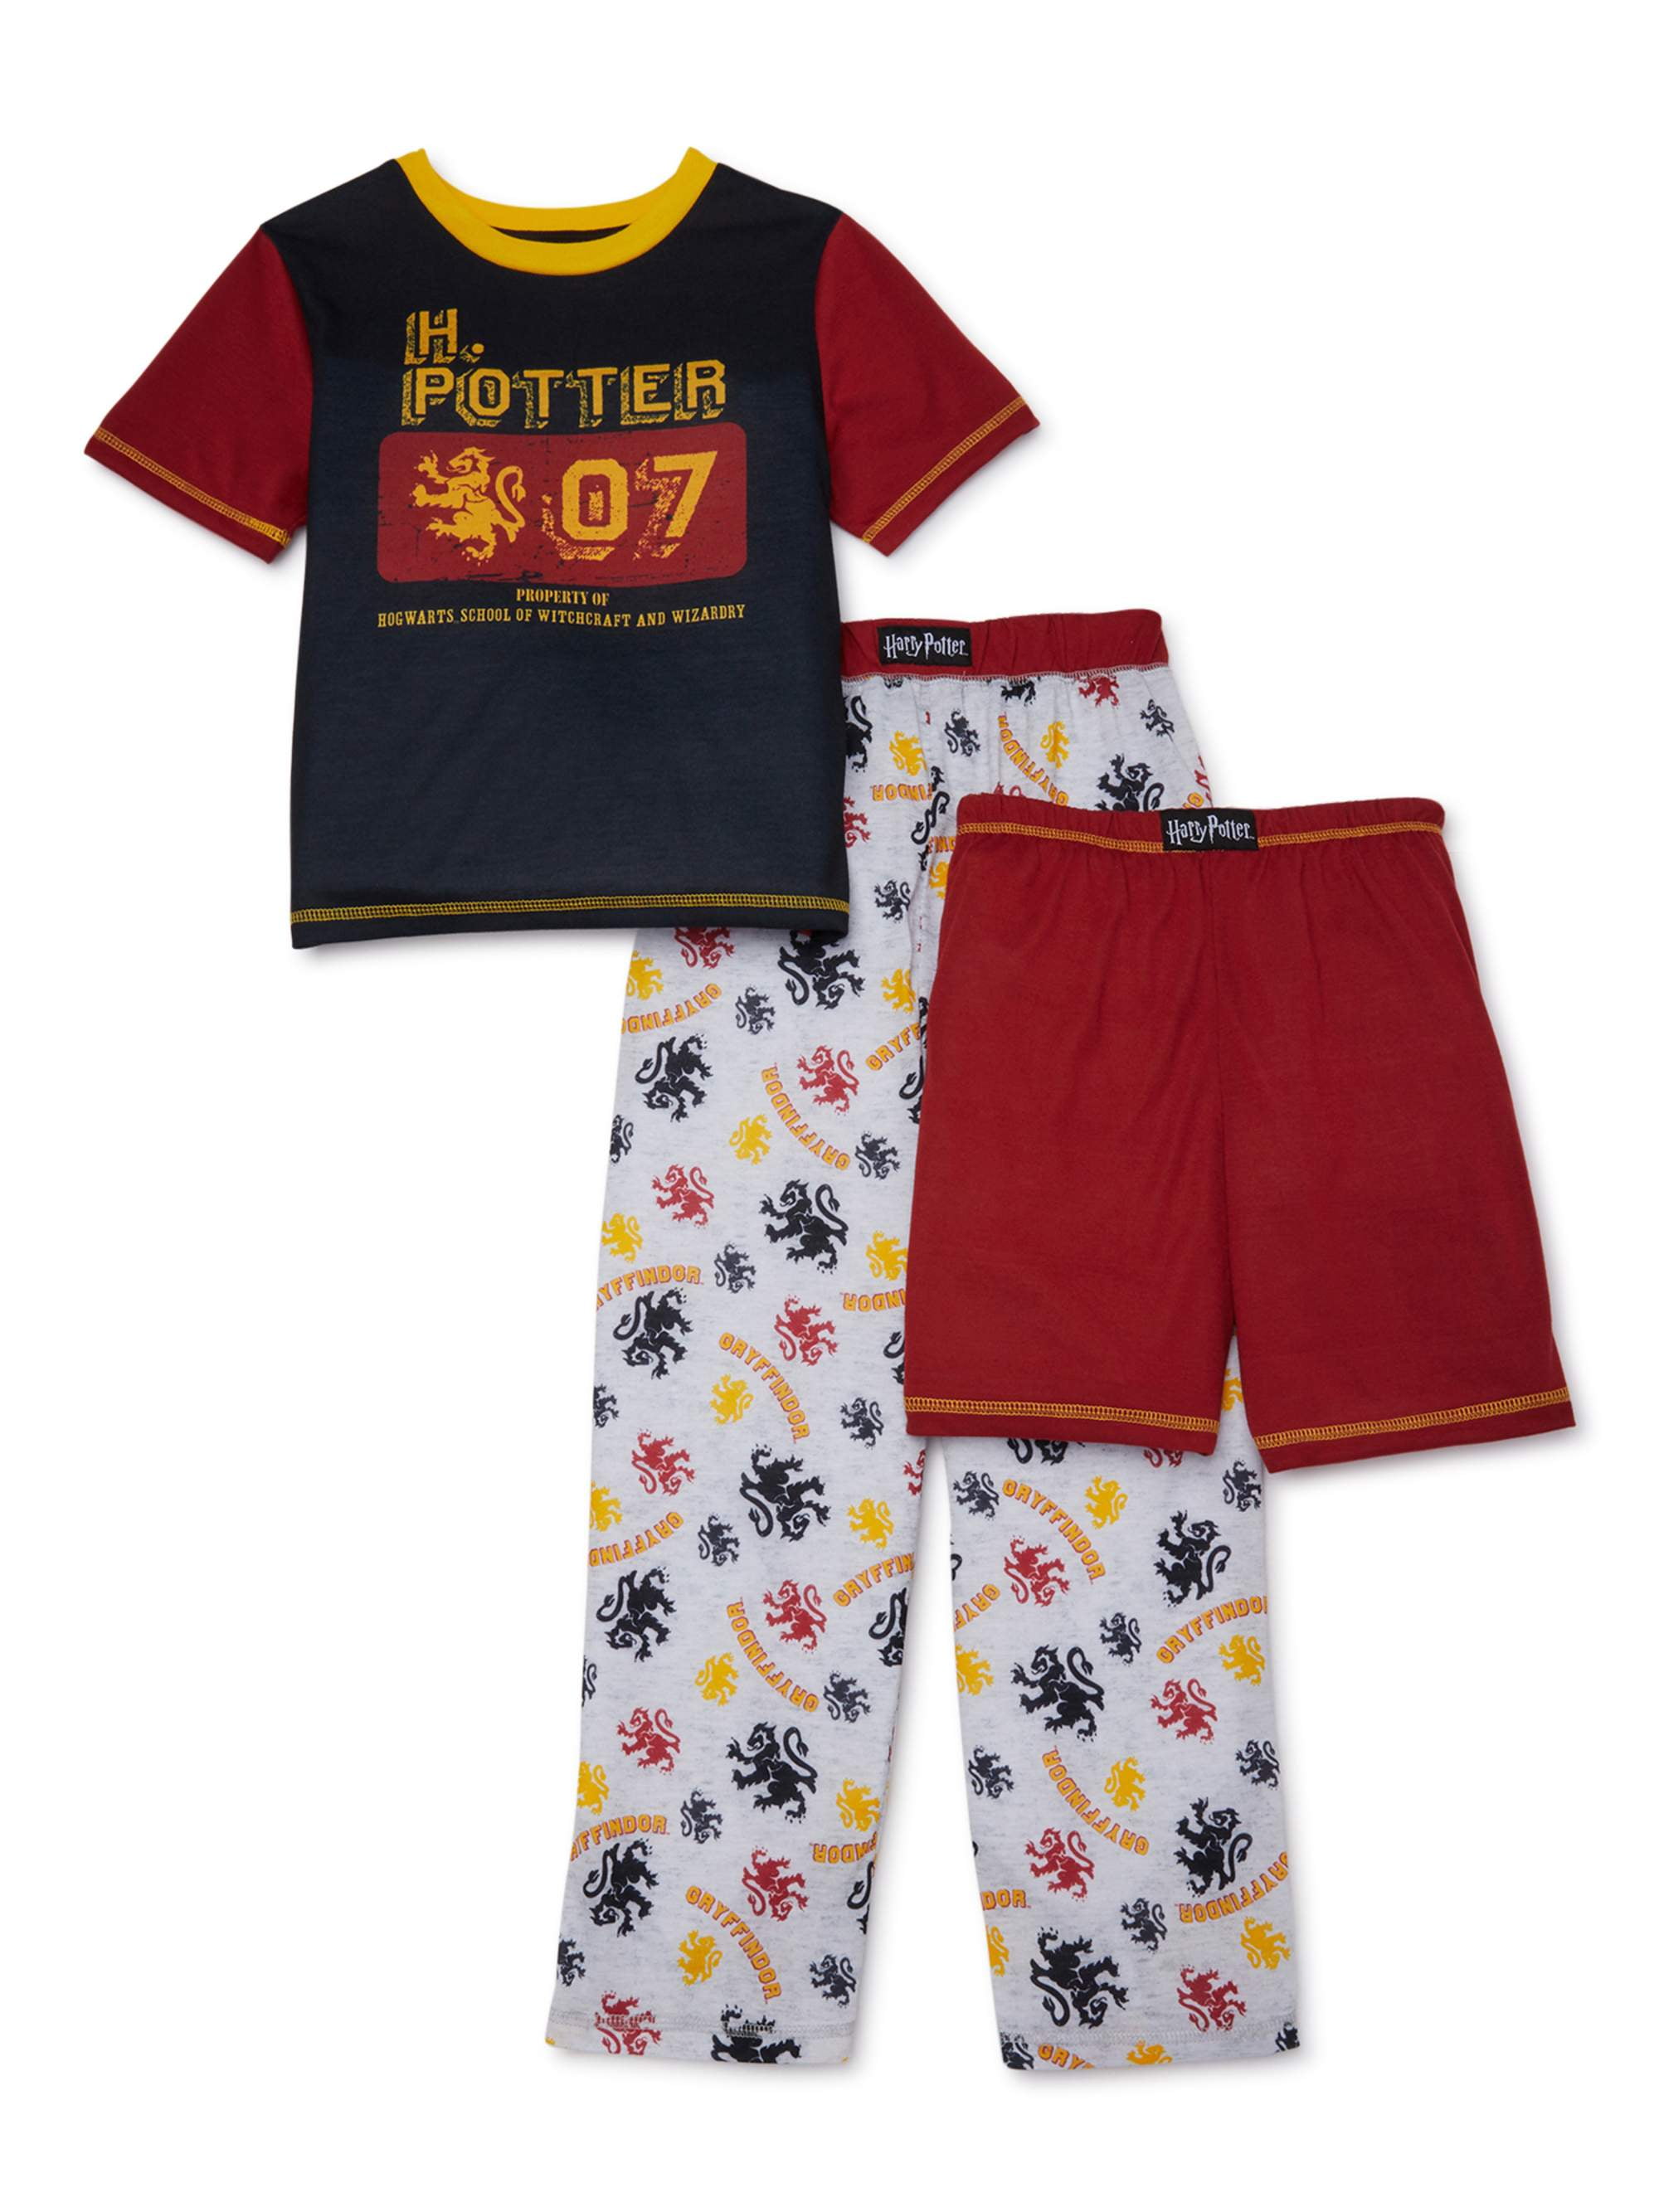 NEW Boys Cotton Harry Potter Pyjama set 5-12 Years 